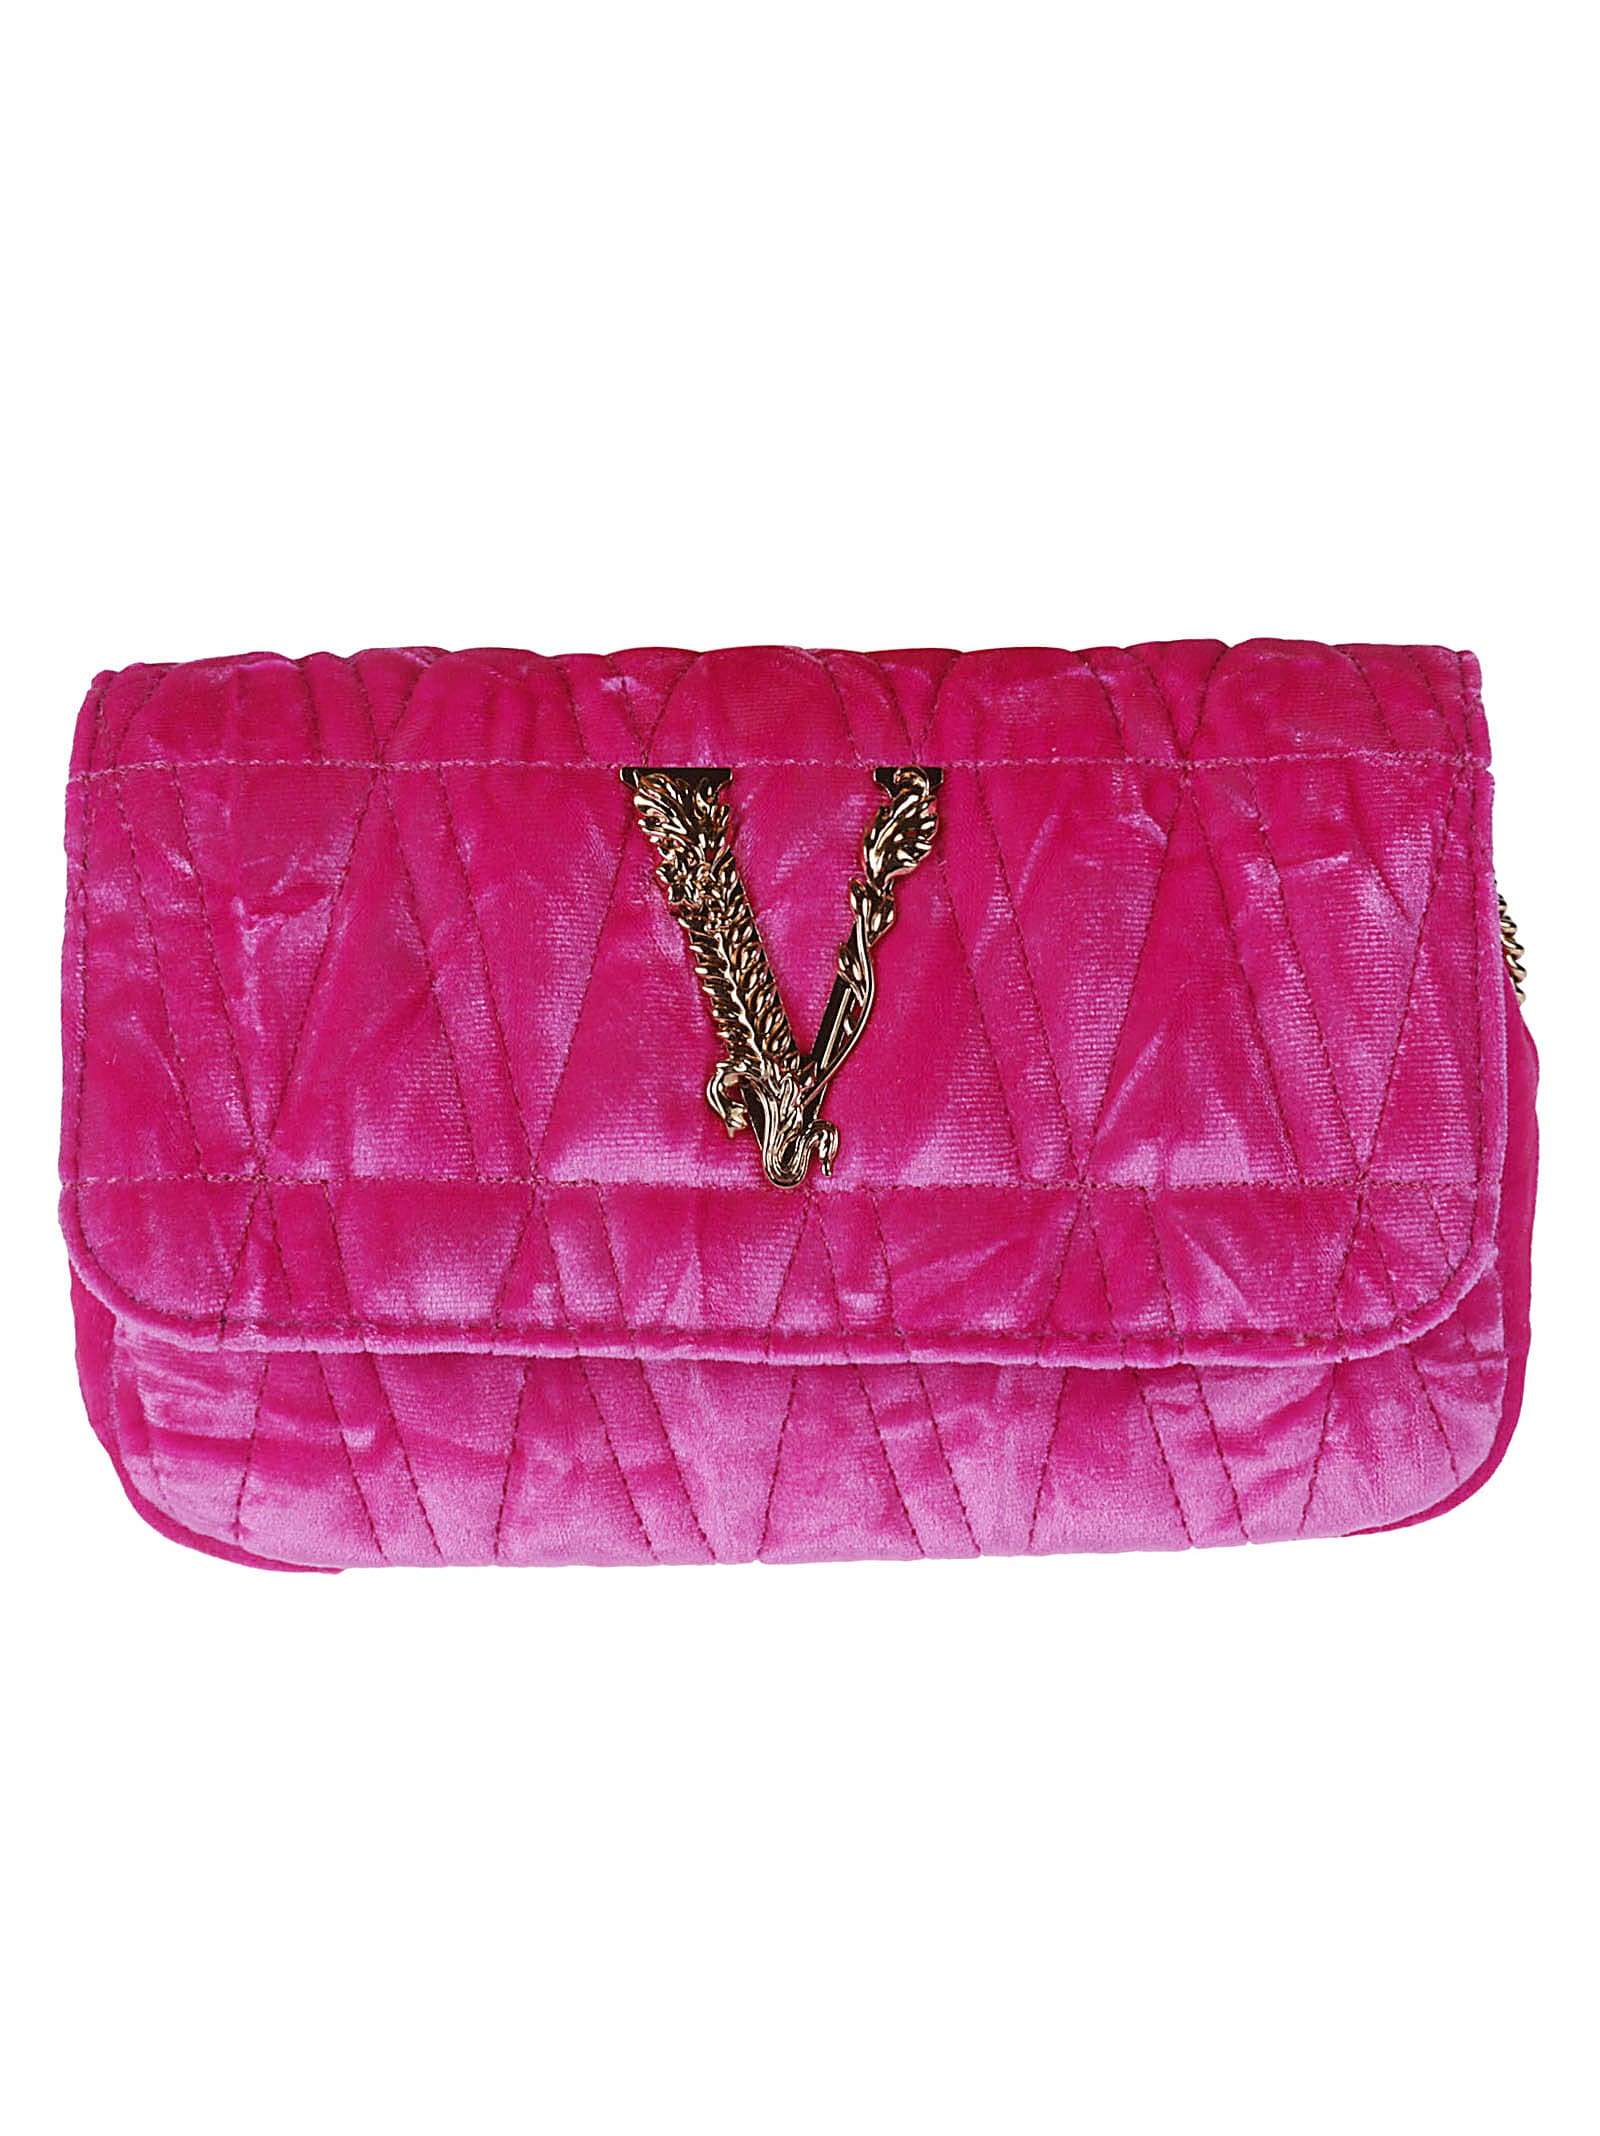 Versace Vitrus Shoulder Bag